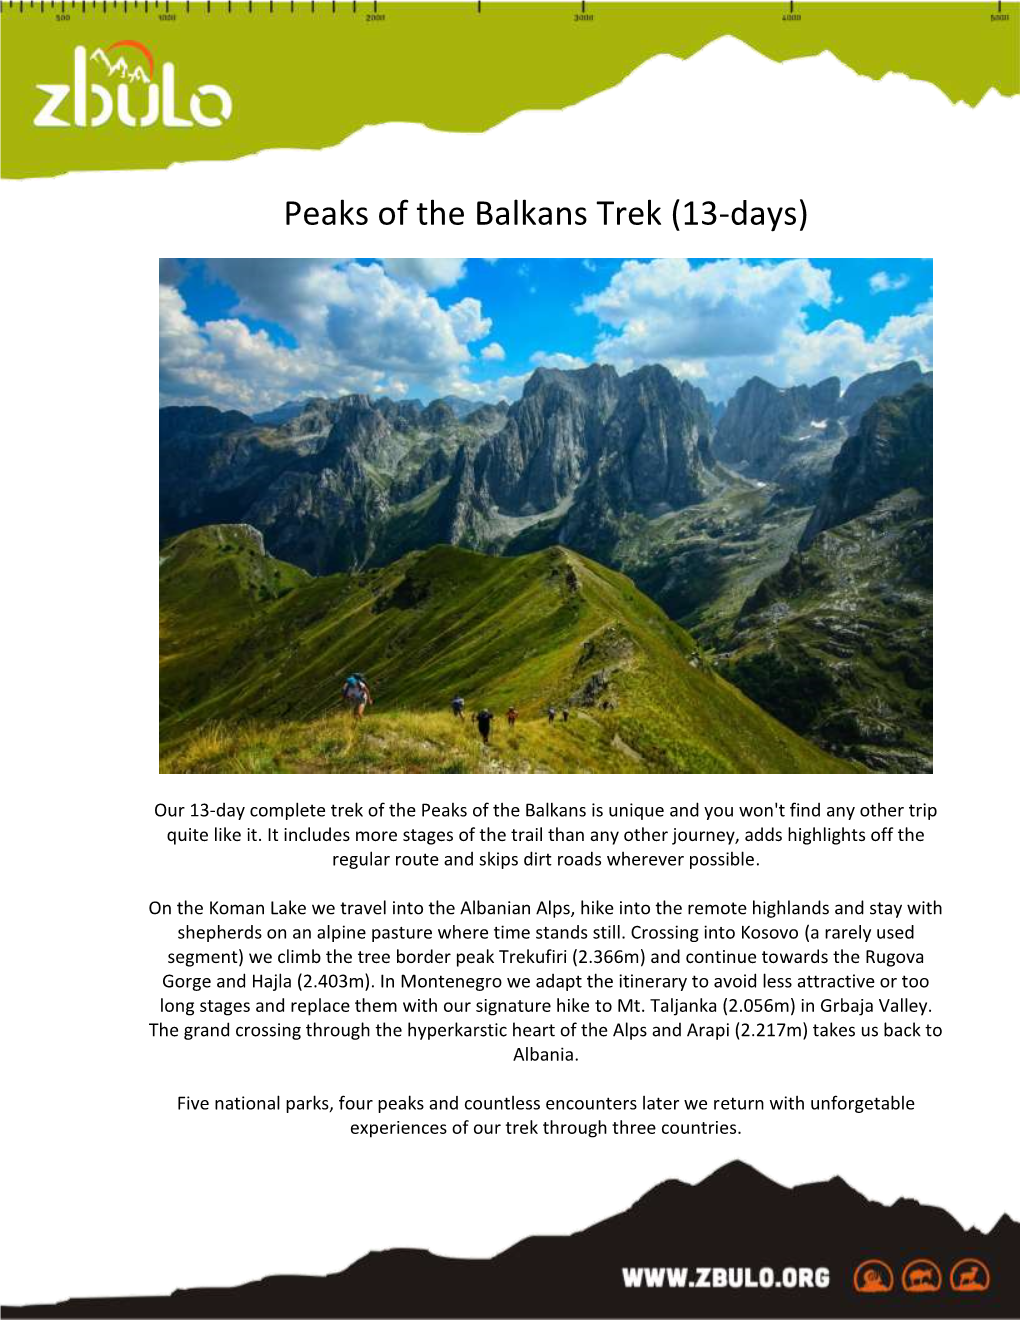 Peaks of the Balkans Trek (13-Days)